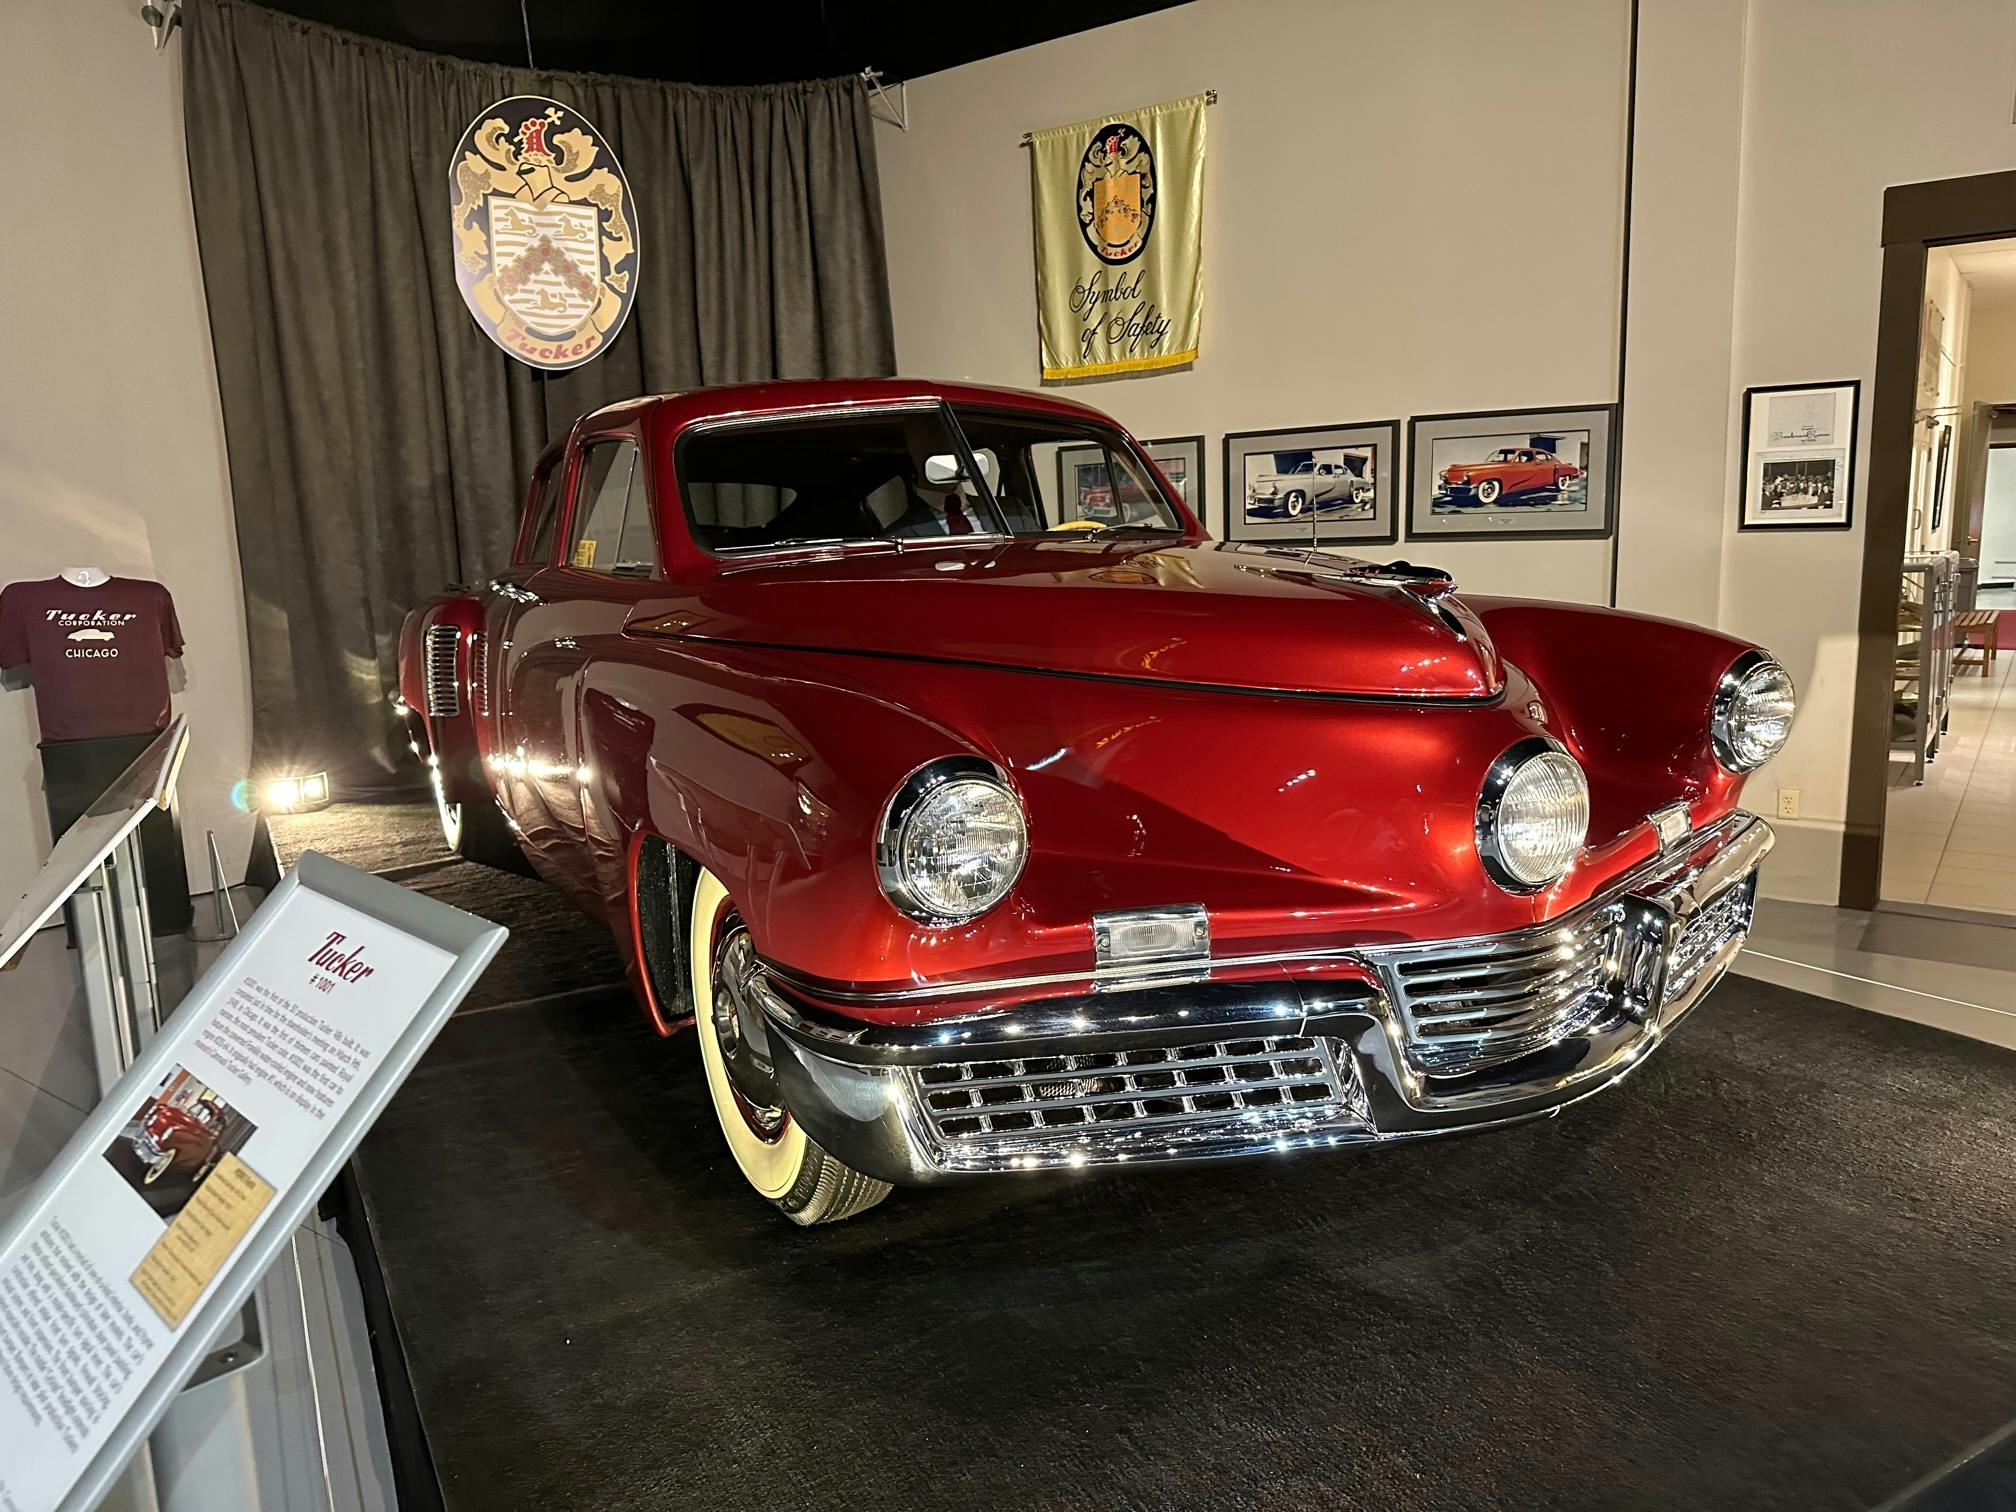 Tucker fan meetup vintage car display